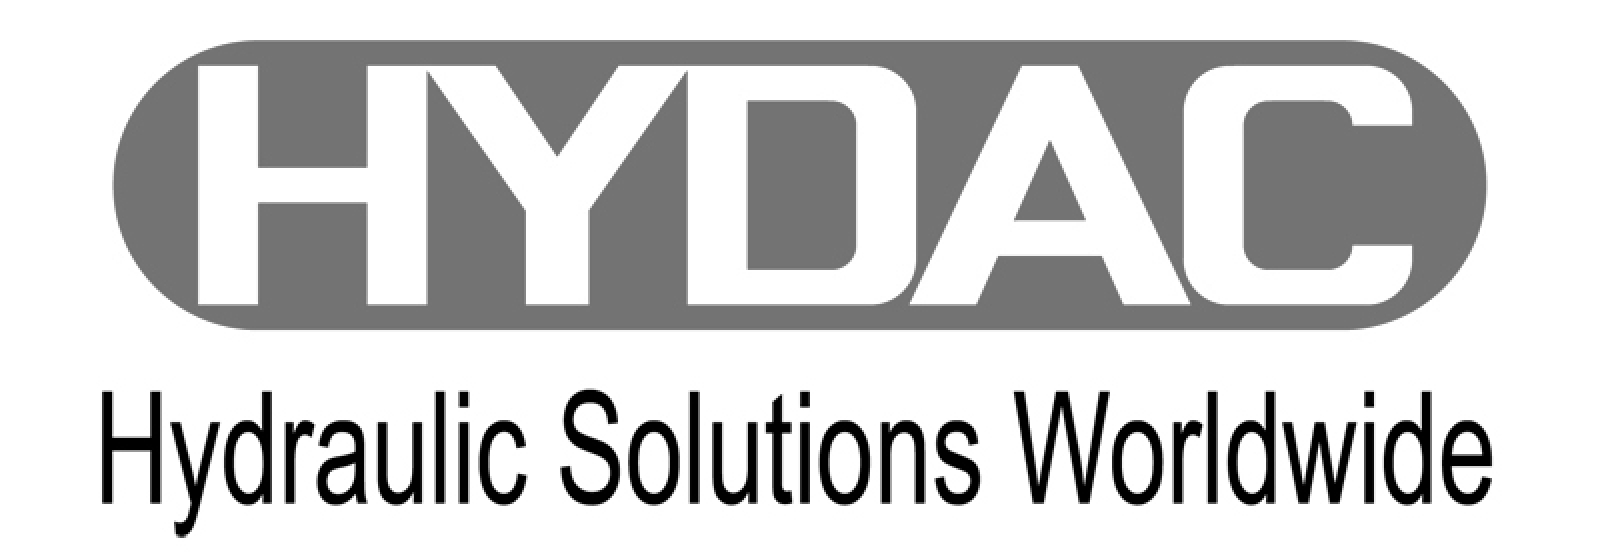 Логотип HYDAC